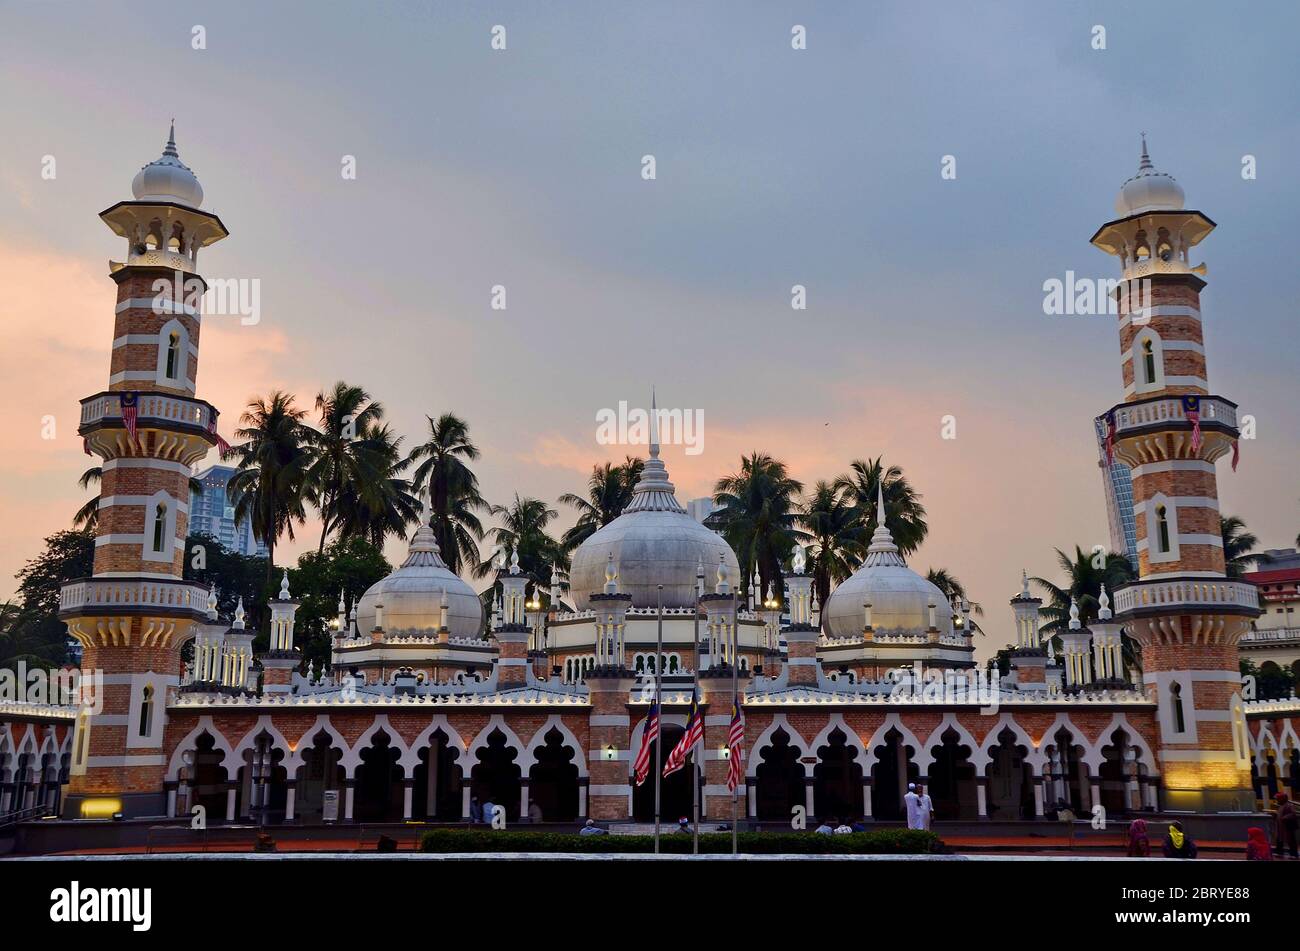 Mosque 'Masjid Jamek' at sunset in Kuala Lumpur, Malaysia Stock Photo